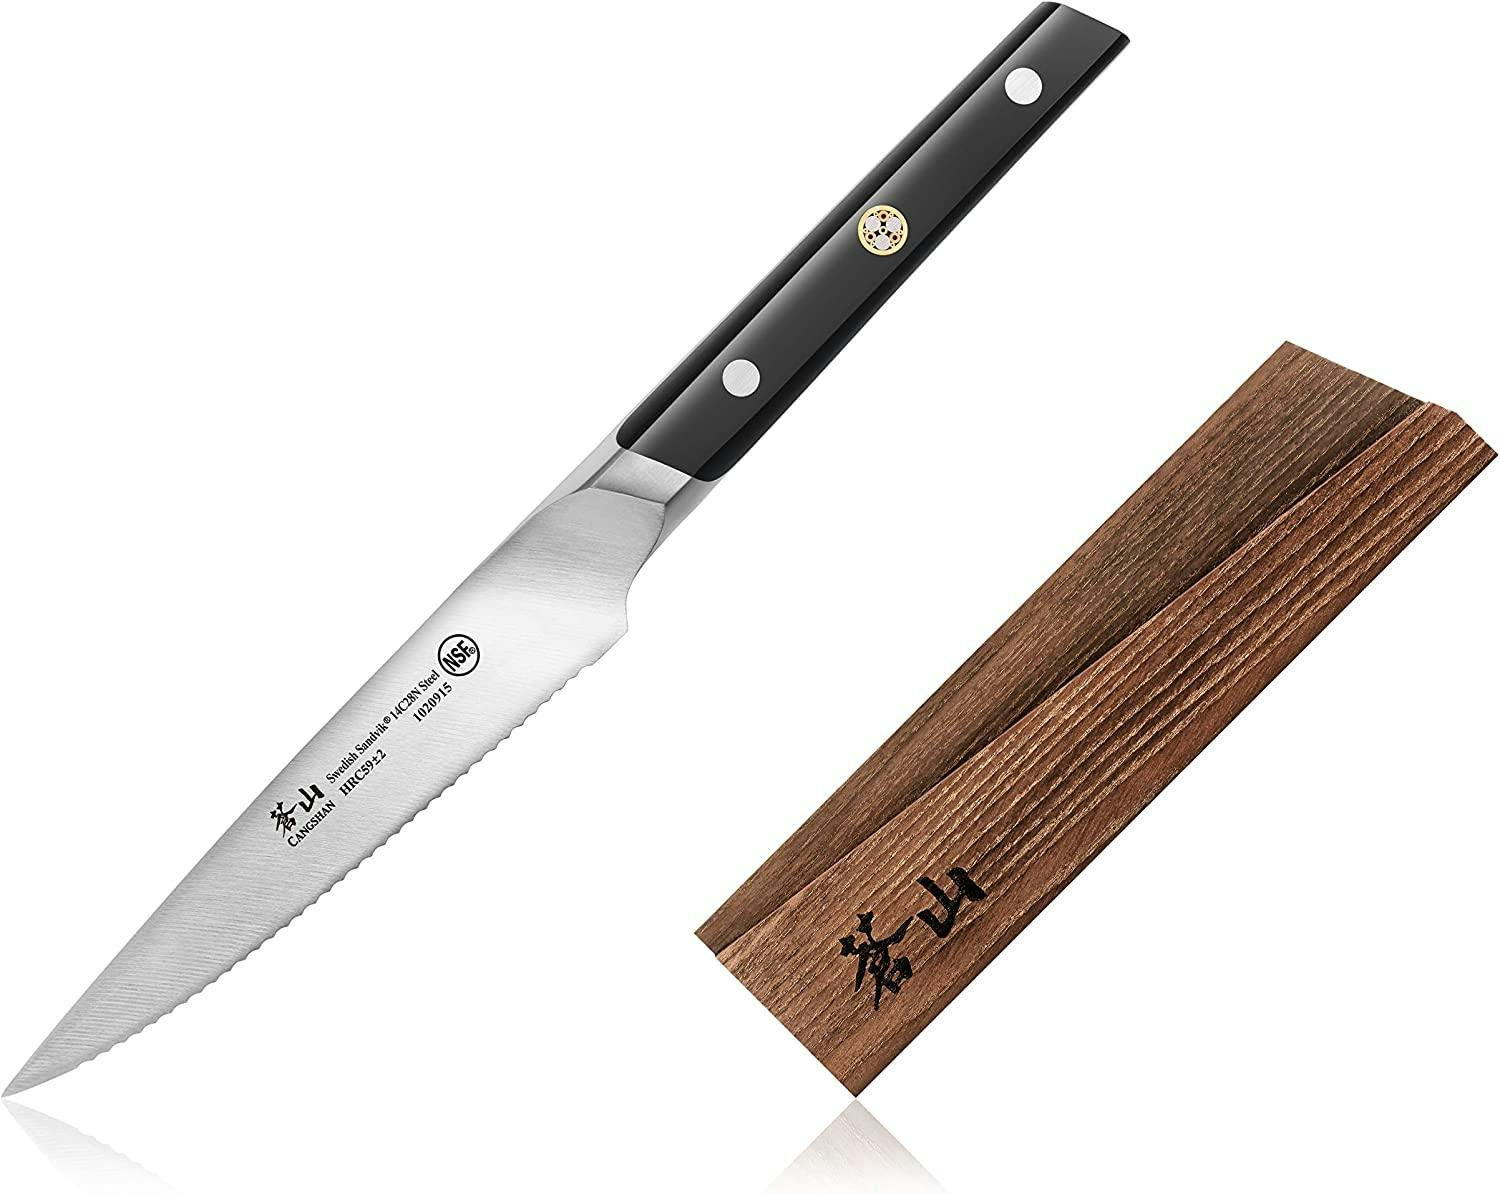 Cangshan TC Series 5" Serrated Utility Knife and Wood Sheath Set